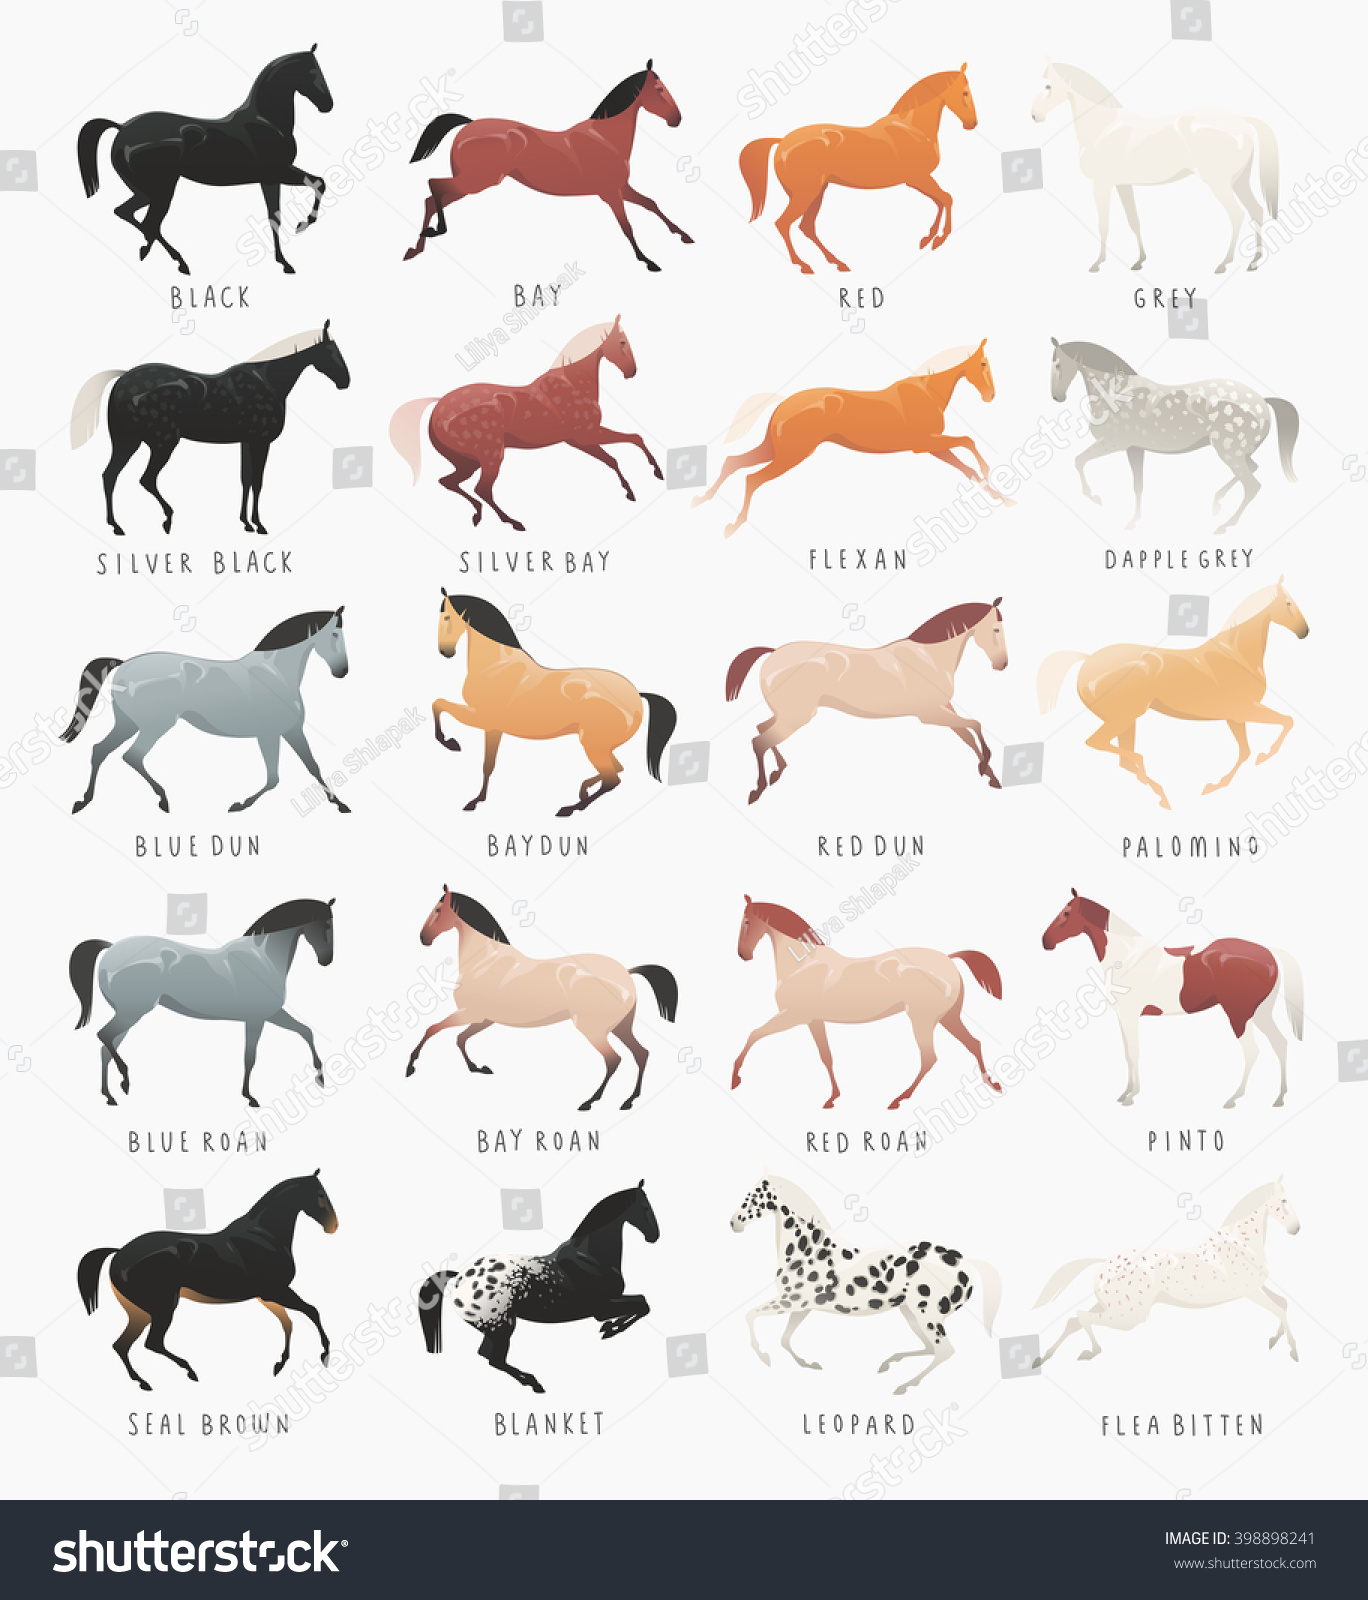 Horse markings Images, Stock Photos & Vectors | Shutterstock